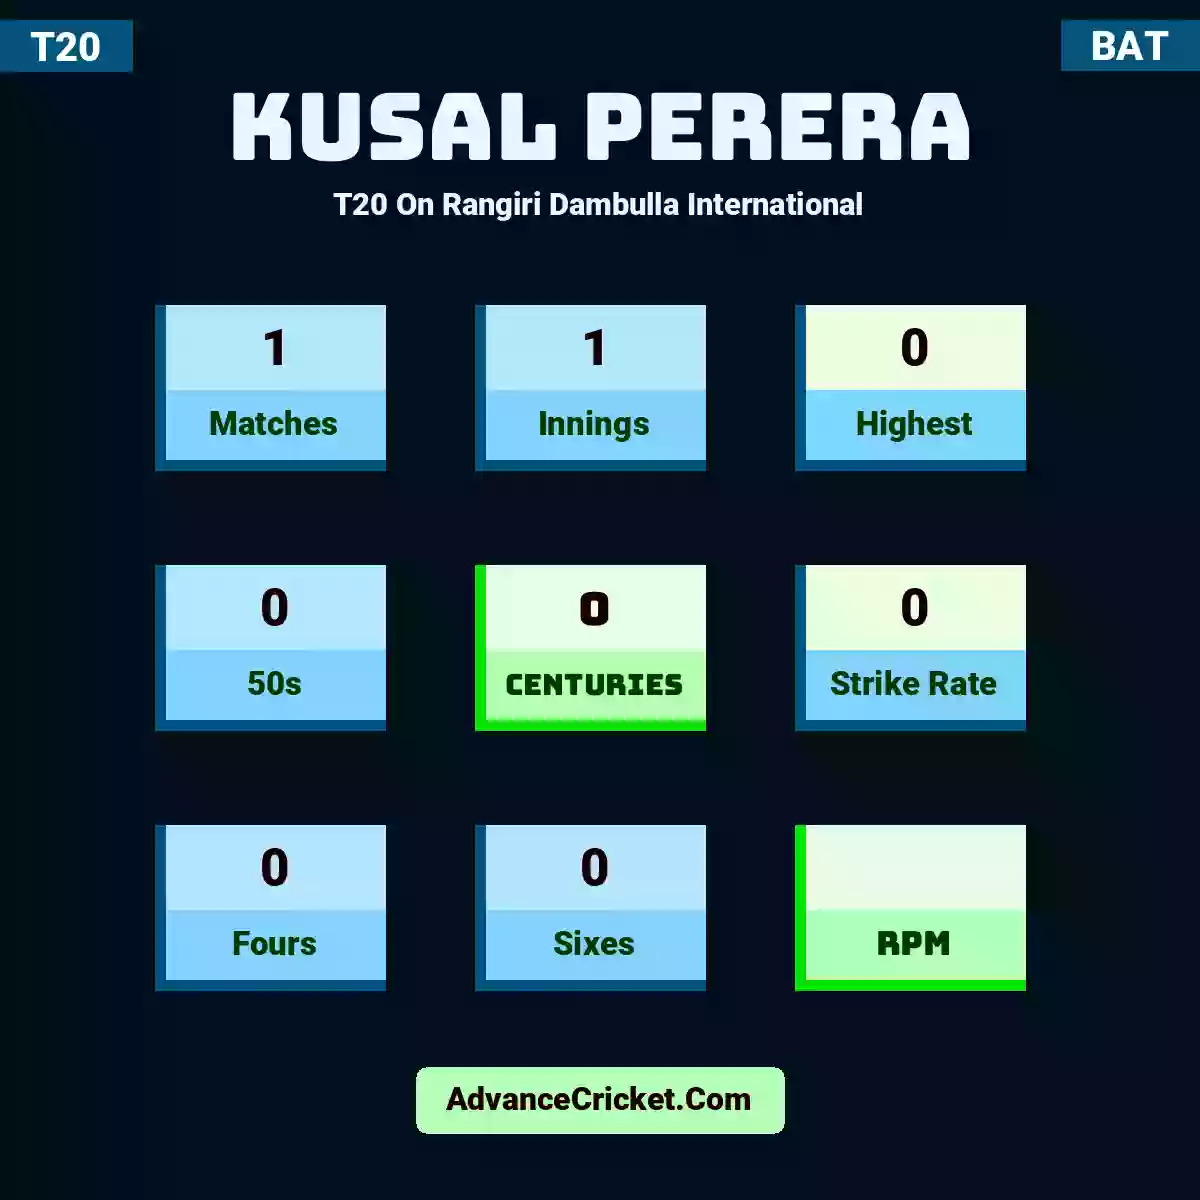 Kusal Perera T20  On Rangiri Dambulla International, Kusal Perera played 1 matches, scored 0 runs as highest, 0 half-centuries, and 0 centuries, with a strike rate of 0. K.Perera hit 0 fours and 0 sixes.